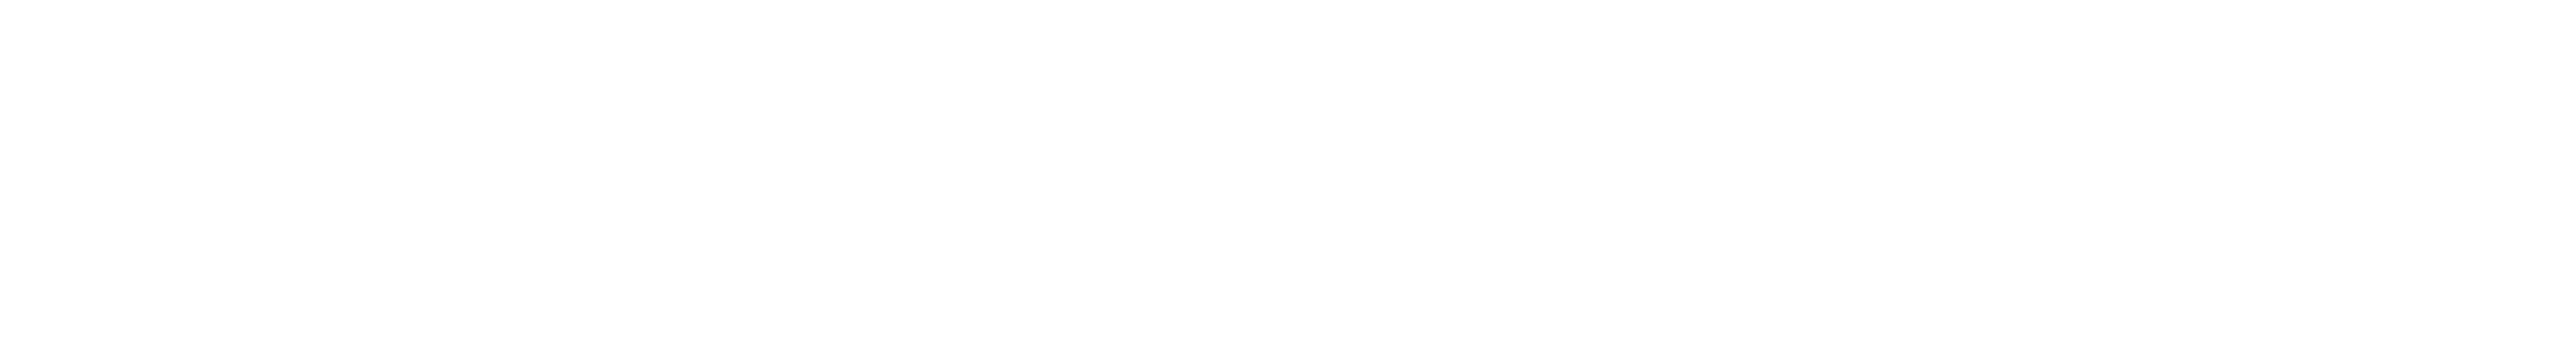 Next Level Solutions Logo